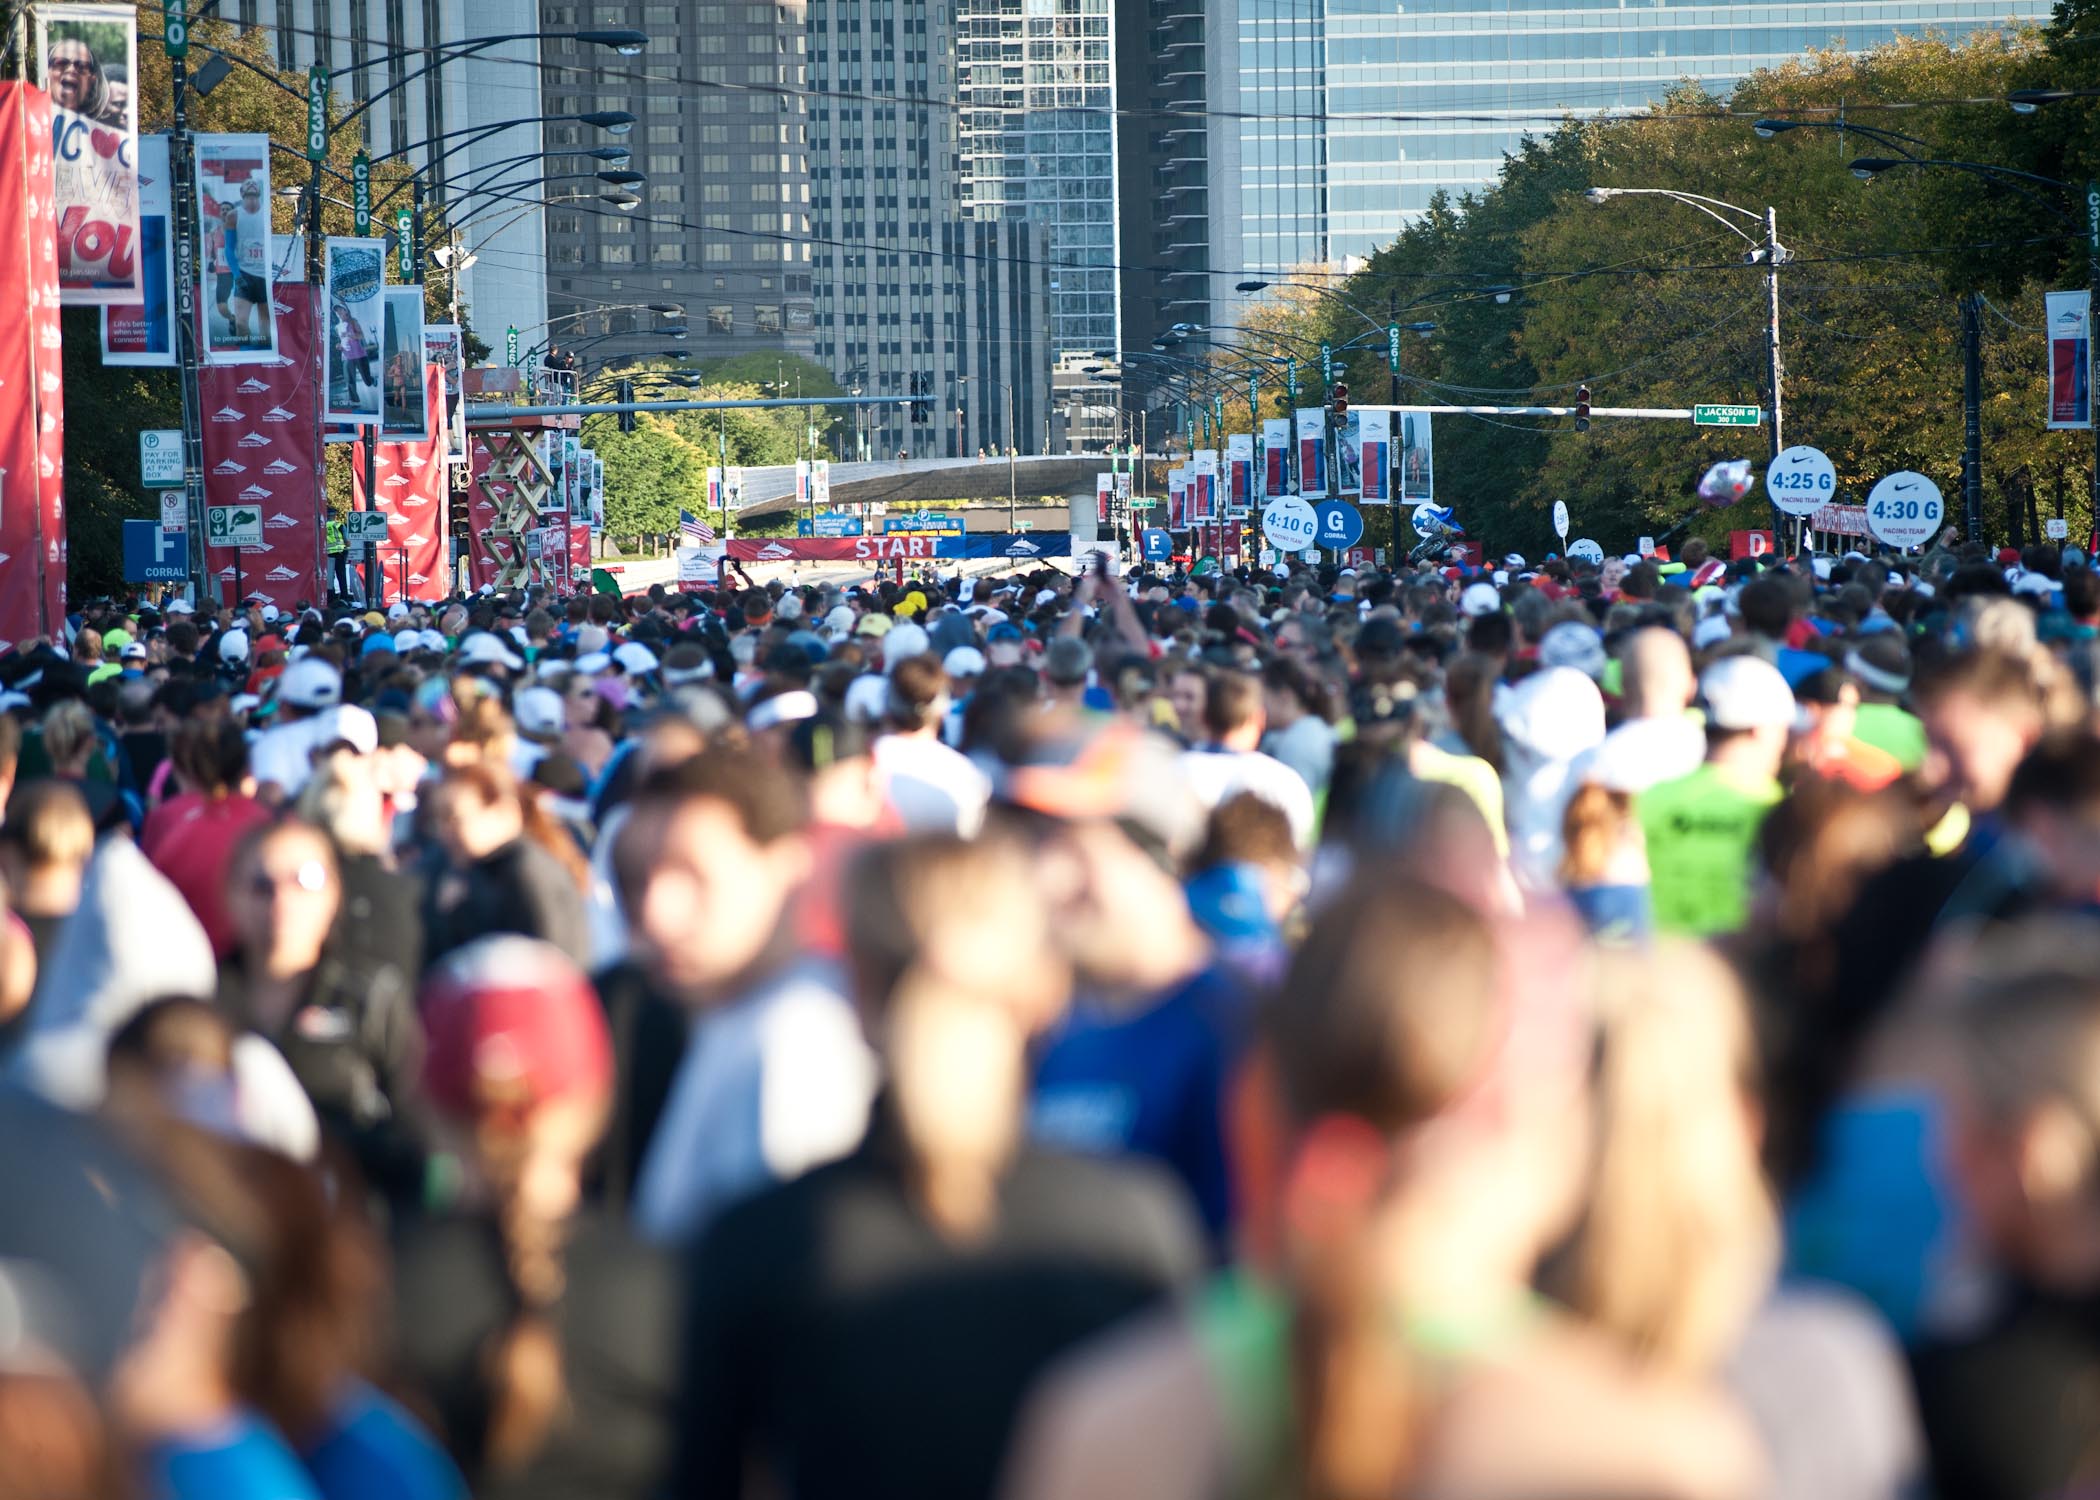 More than 40,000 runners ran this year’s Chicago Marathon.